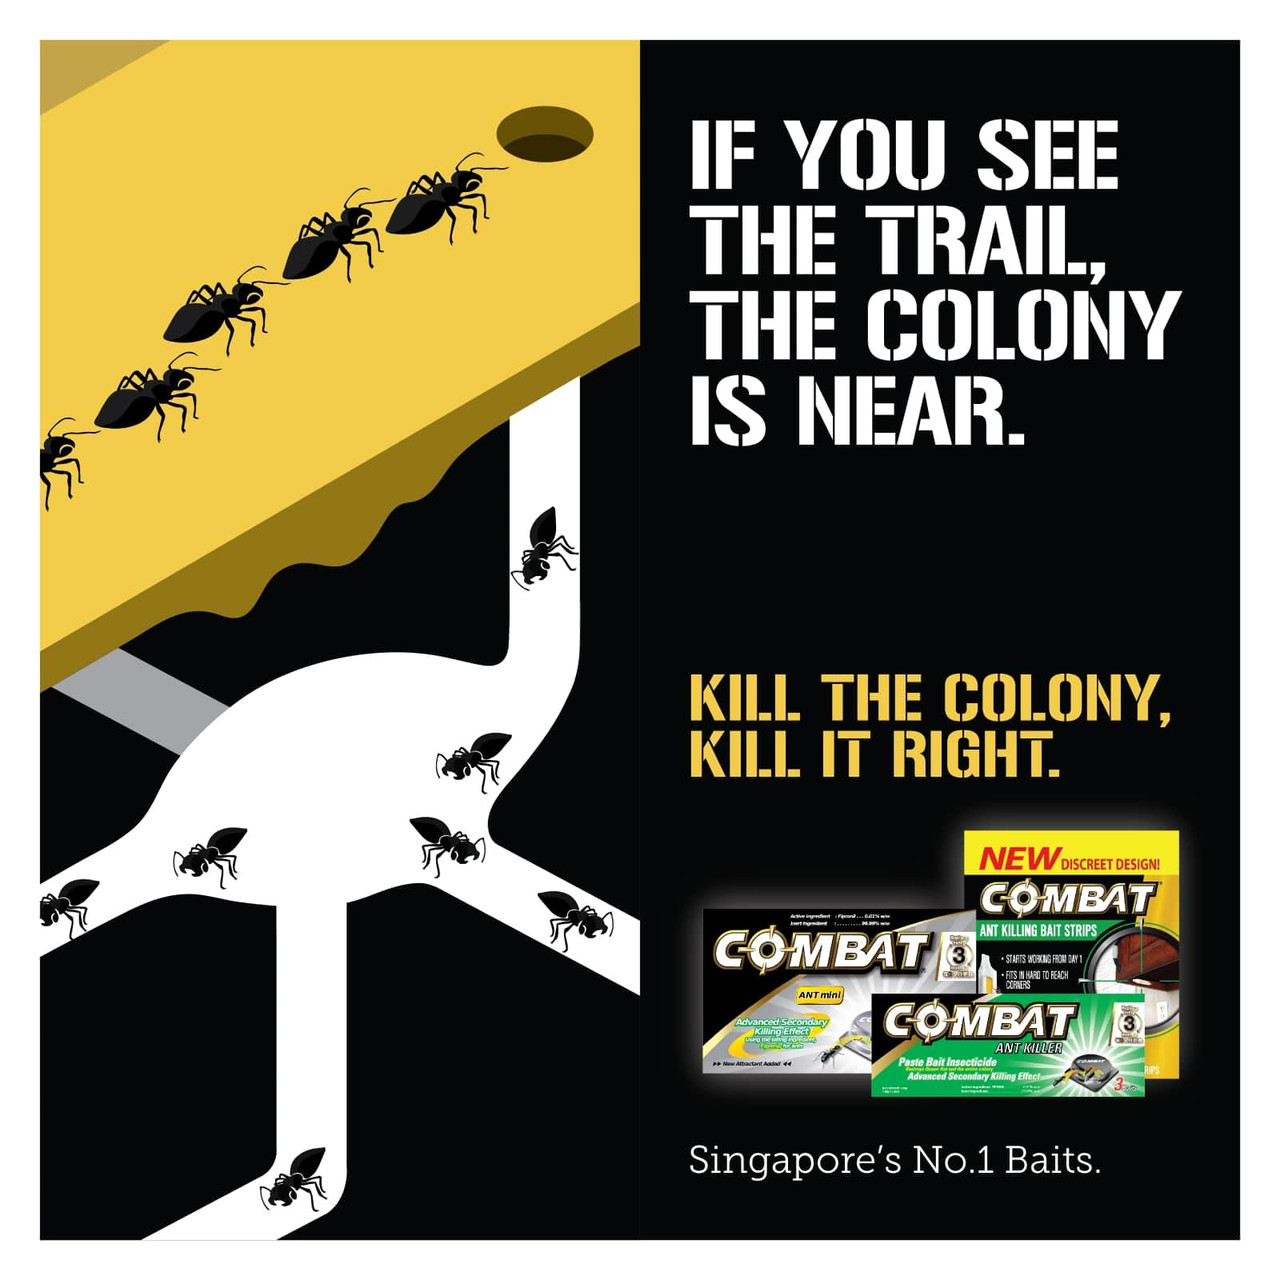 Combat Ant Killing Bait Strips